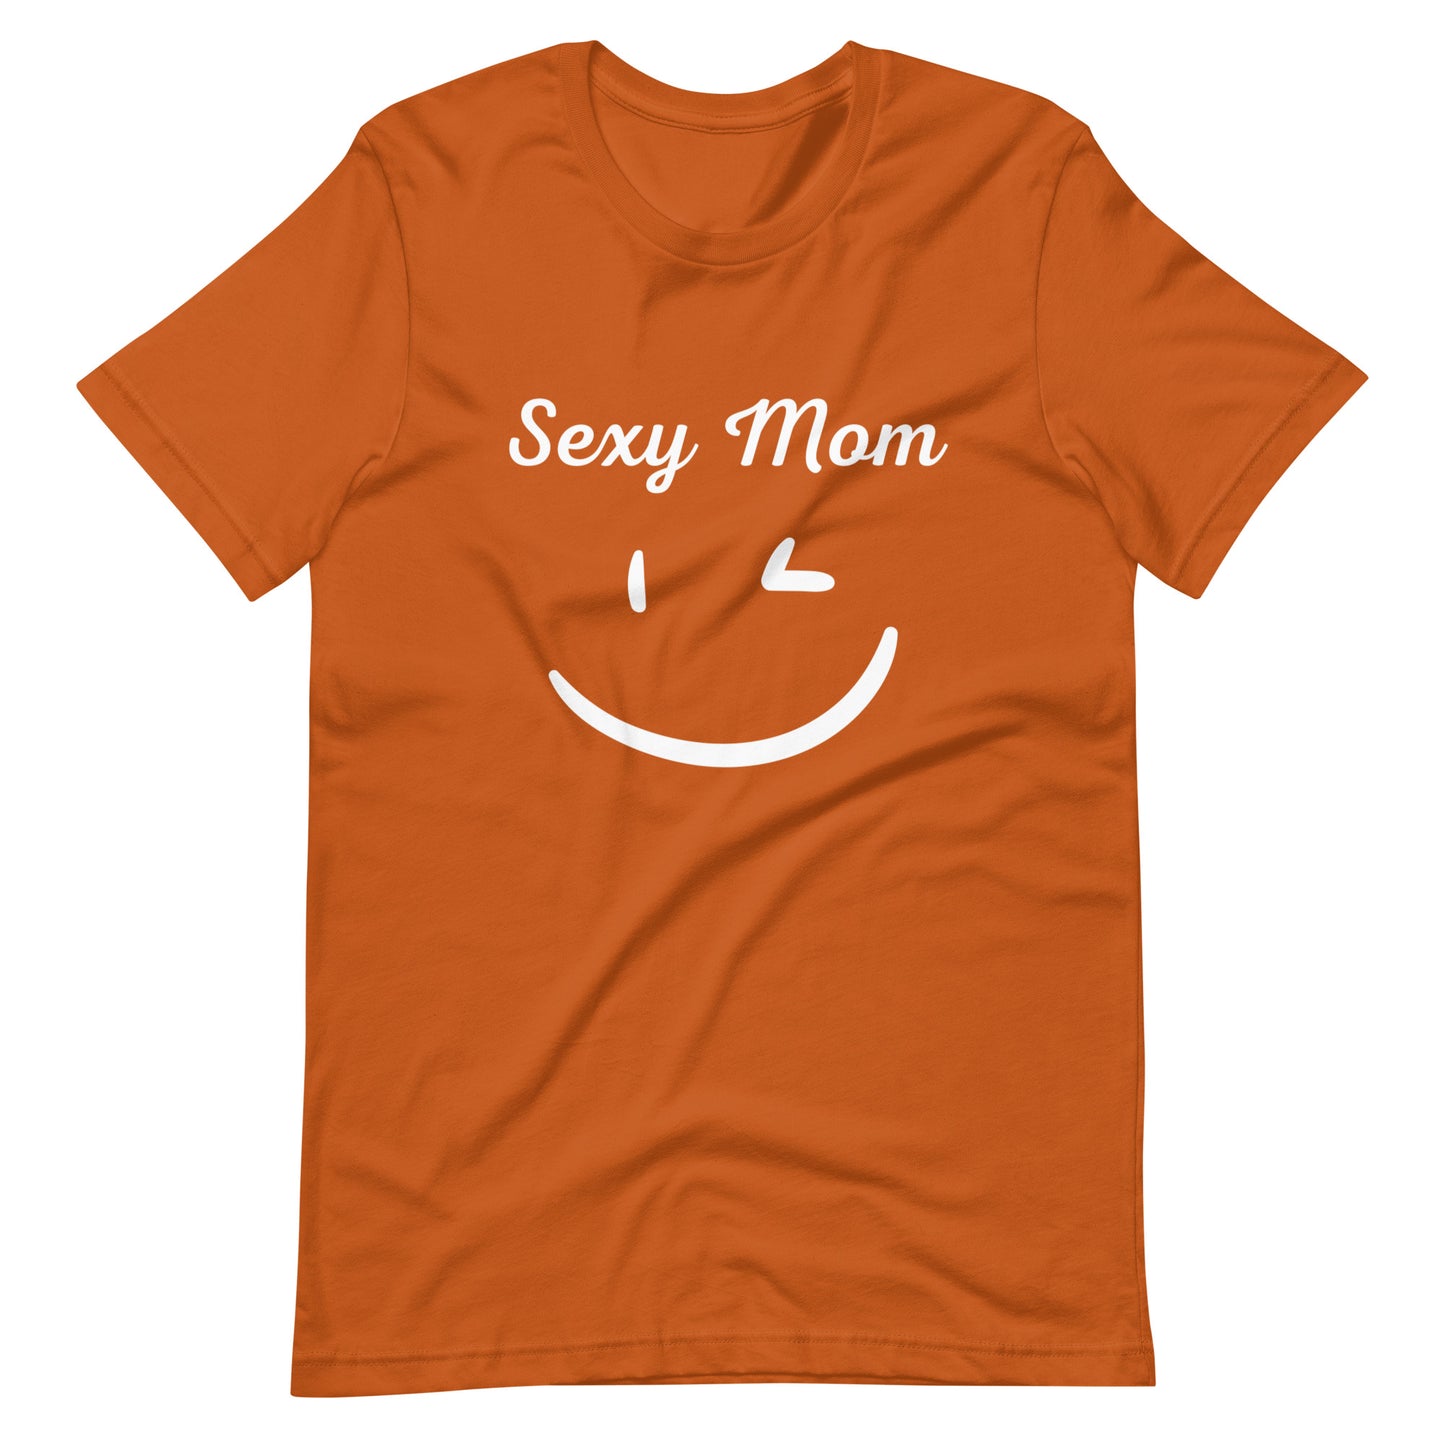 Sexy Mom t-shirt